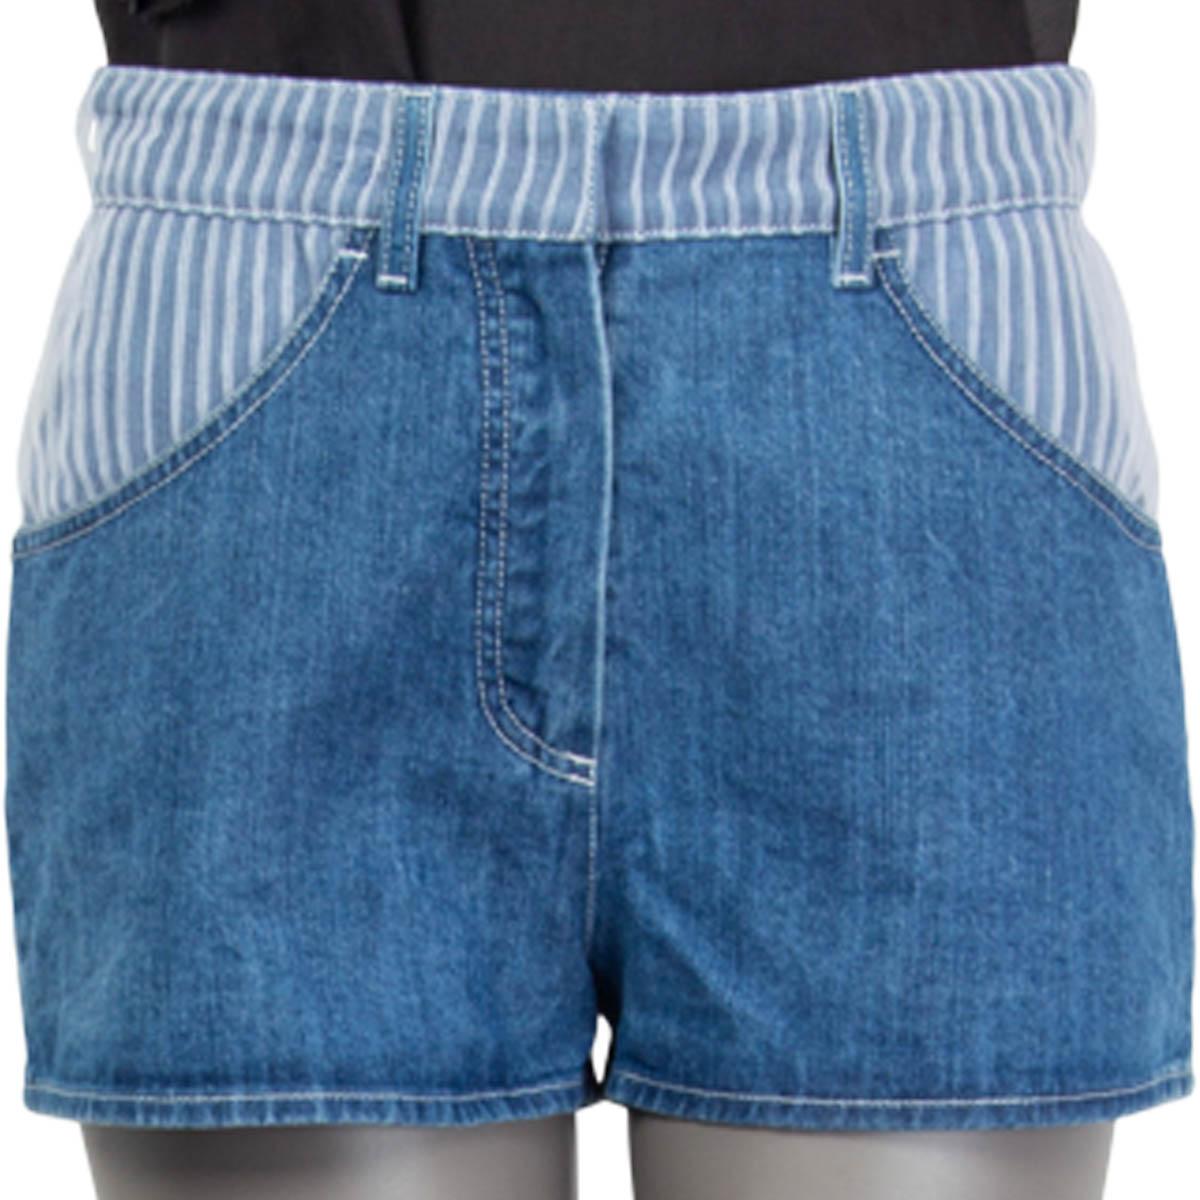 CHANLE Indigoblaue Baumwolle 2014 STRIPED DENIM HOT PANTS Shorts 36 XS (Blau) im Angebot